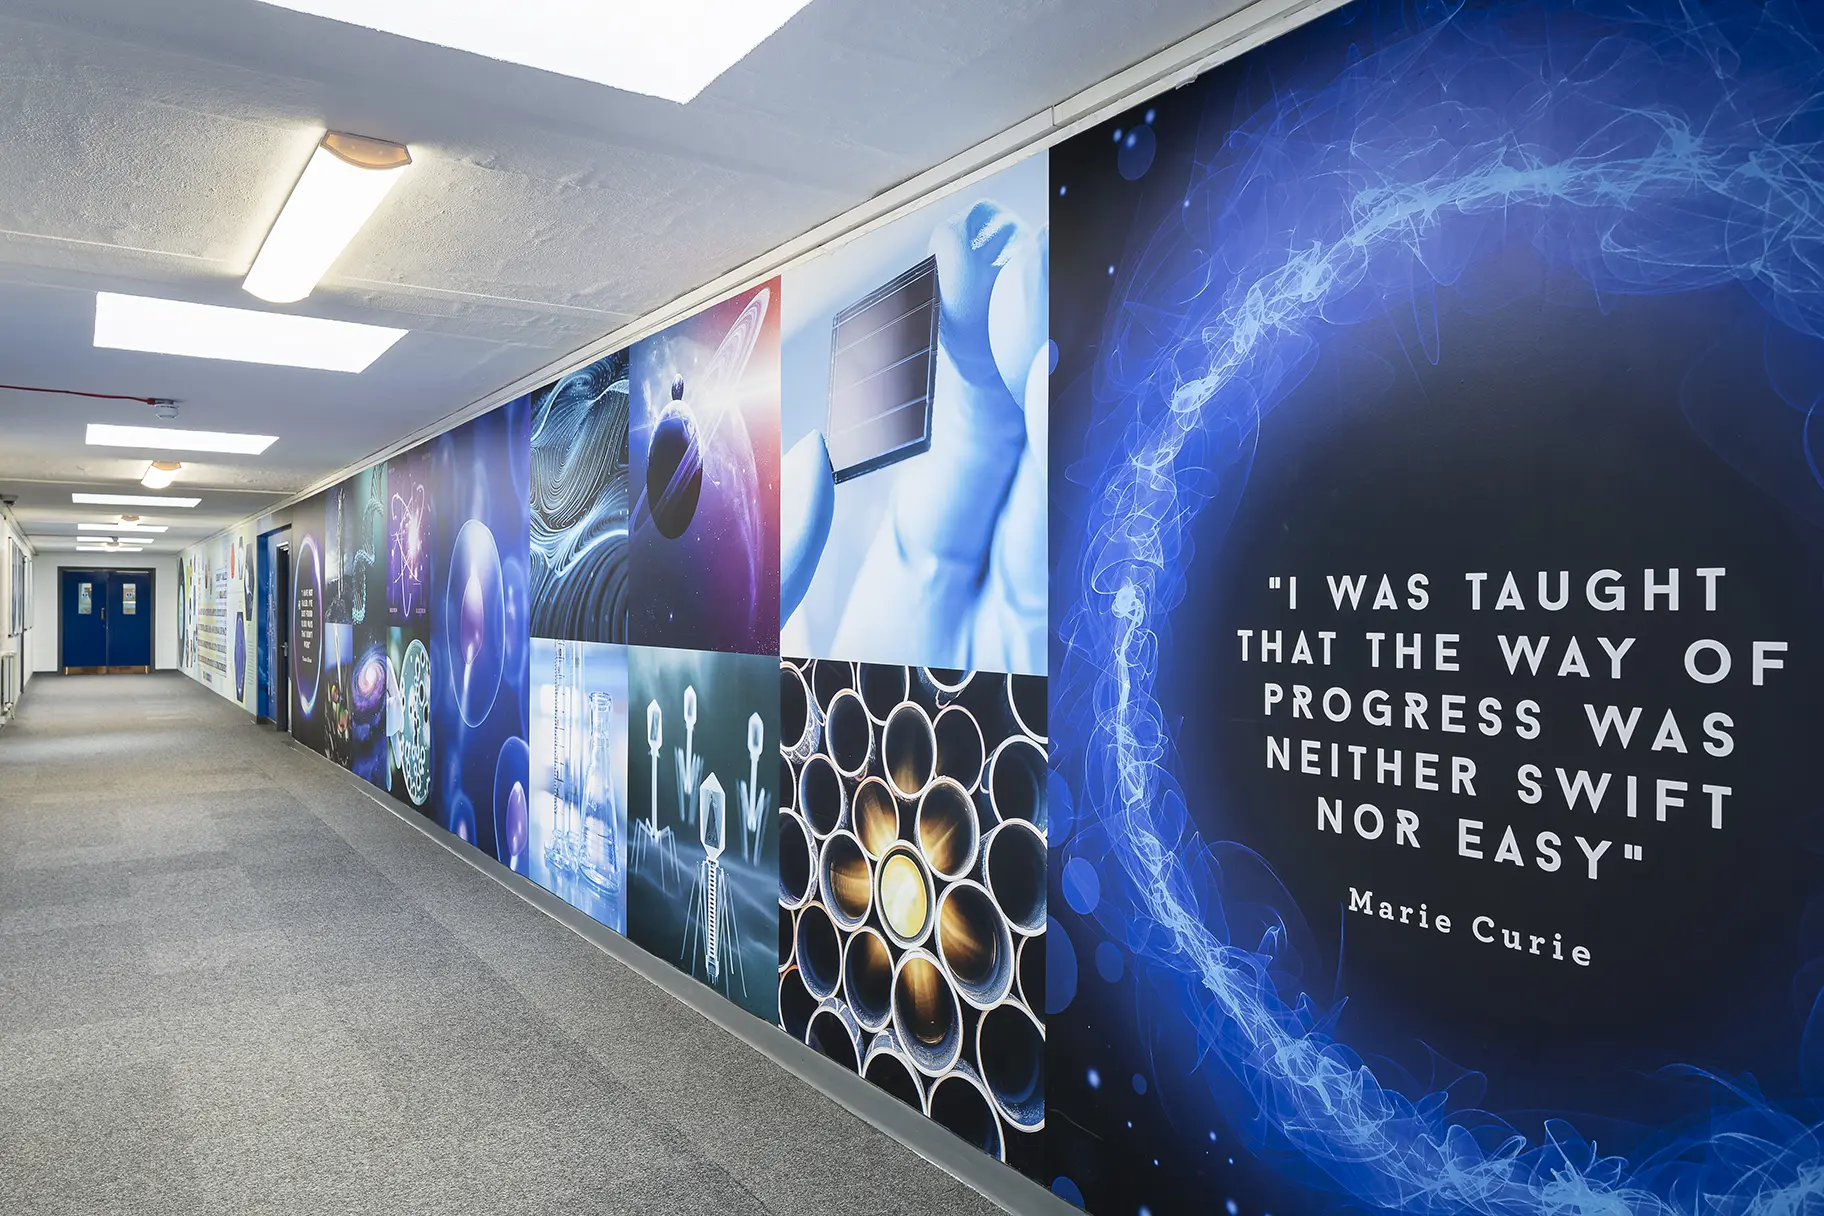 The Forest School Science Corridor Wall Art